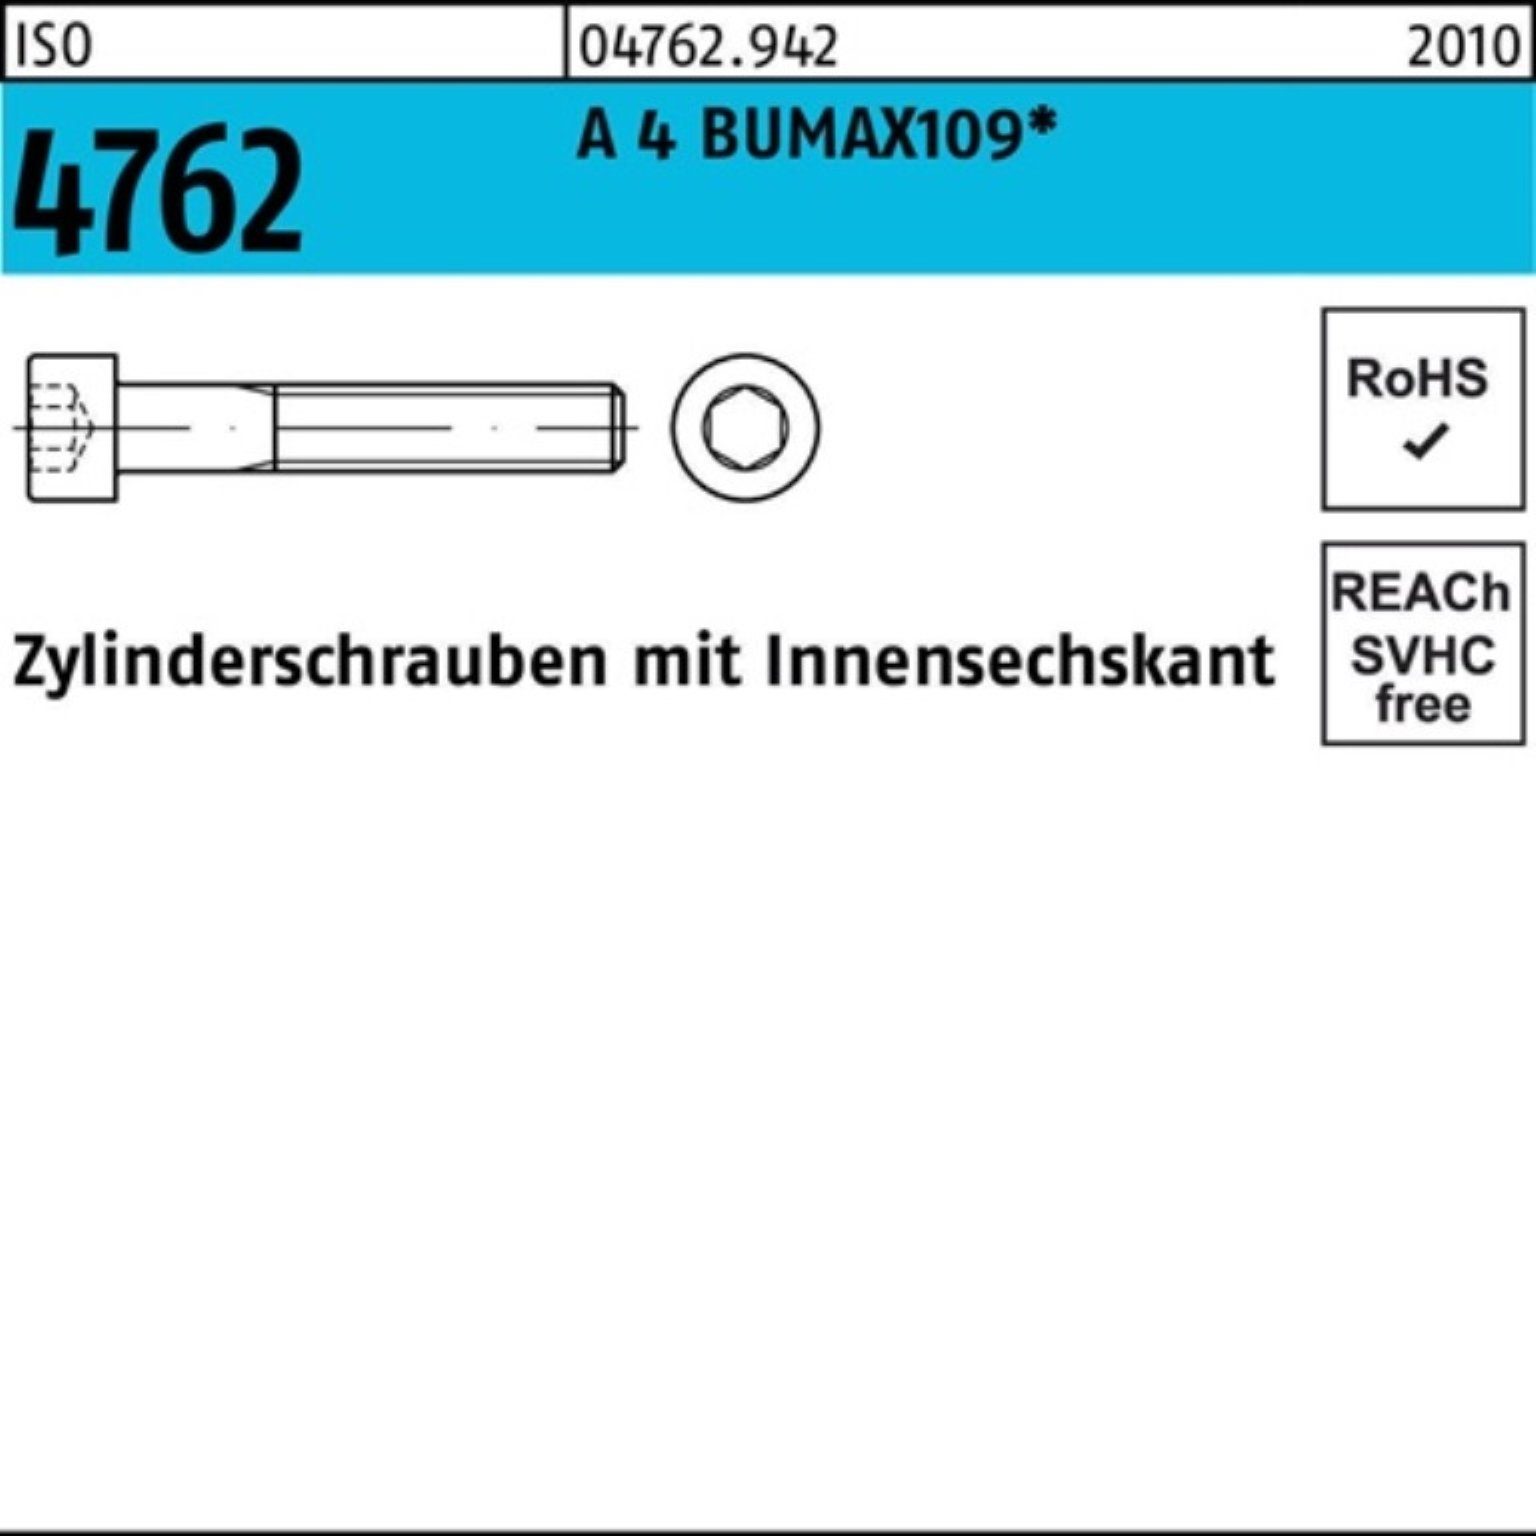 Bufab Zylinderschraube 100er Pack Zylinderschraube ISO 4762 Innen-6kt M10x 60 A 4 BUMAX109 50